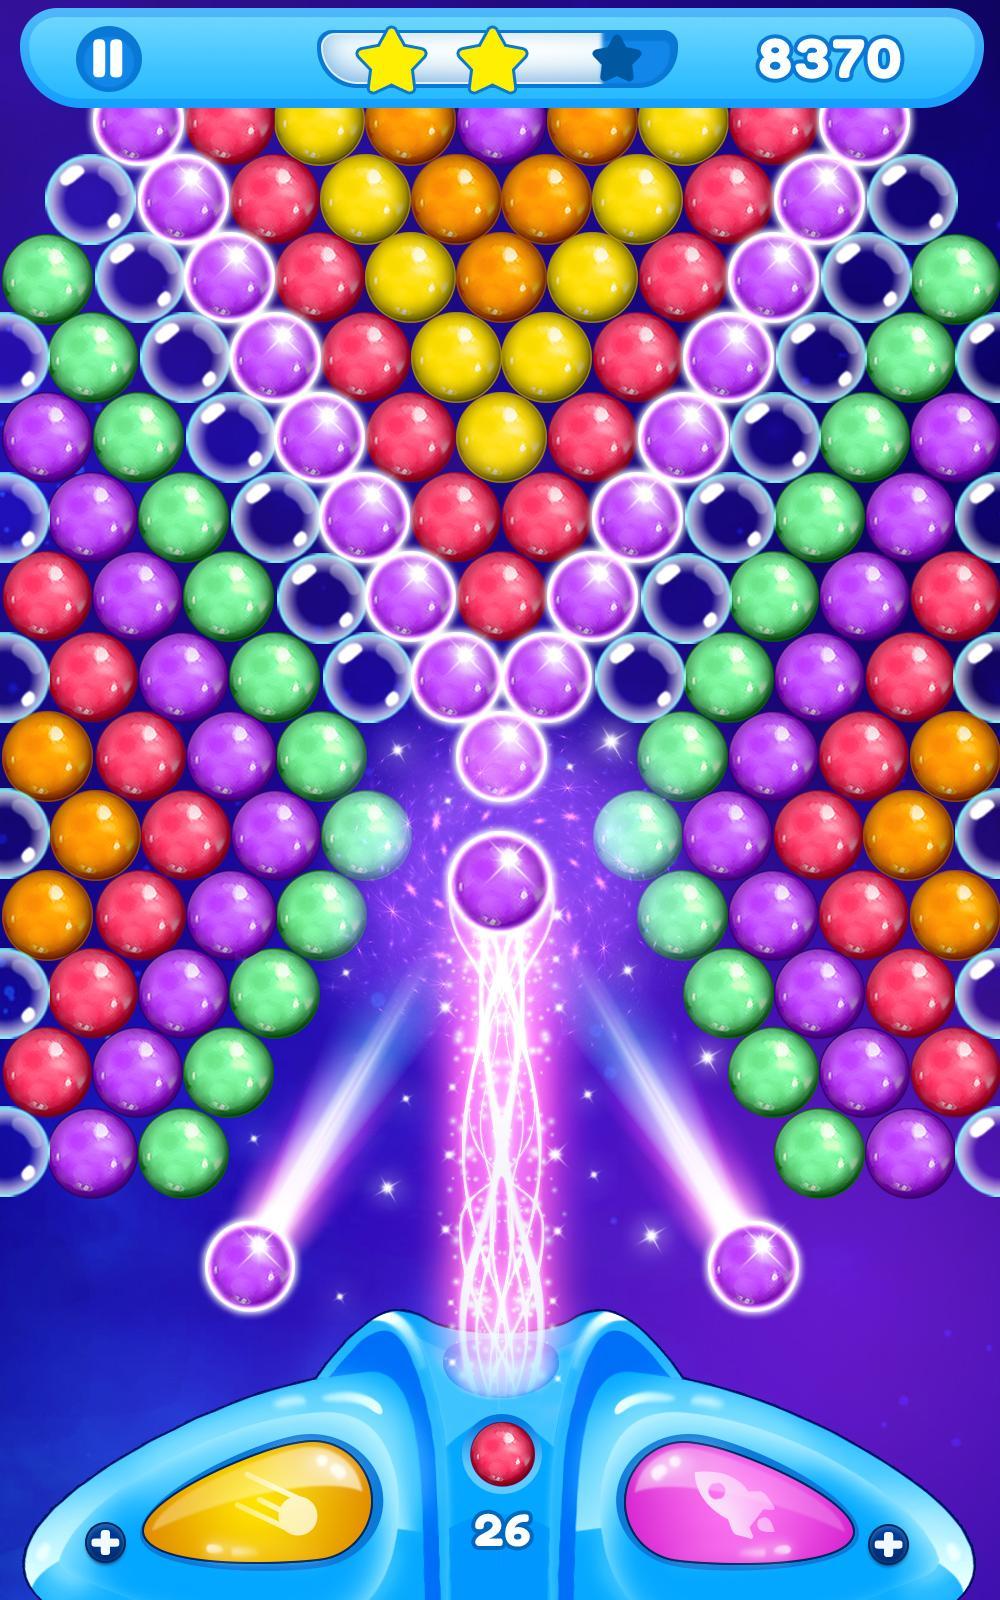 Screenshot of Bubble Sphere